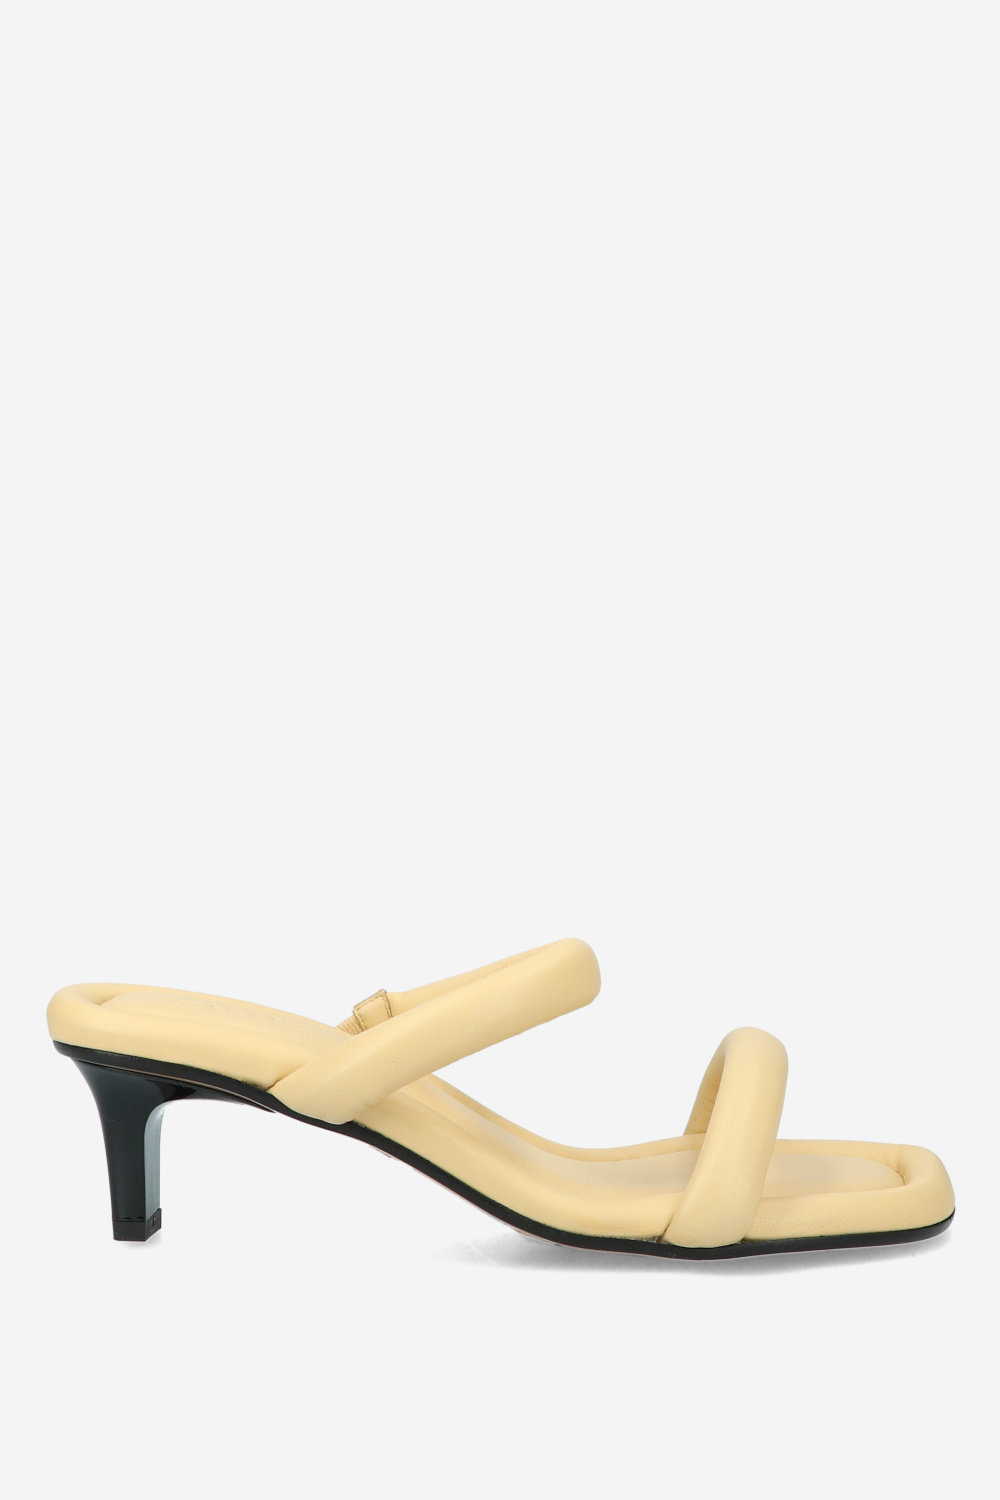 Isabel Marant Sandals Yellow